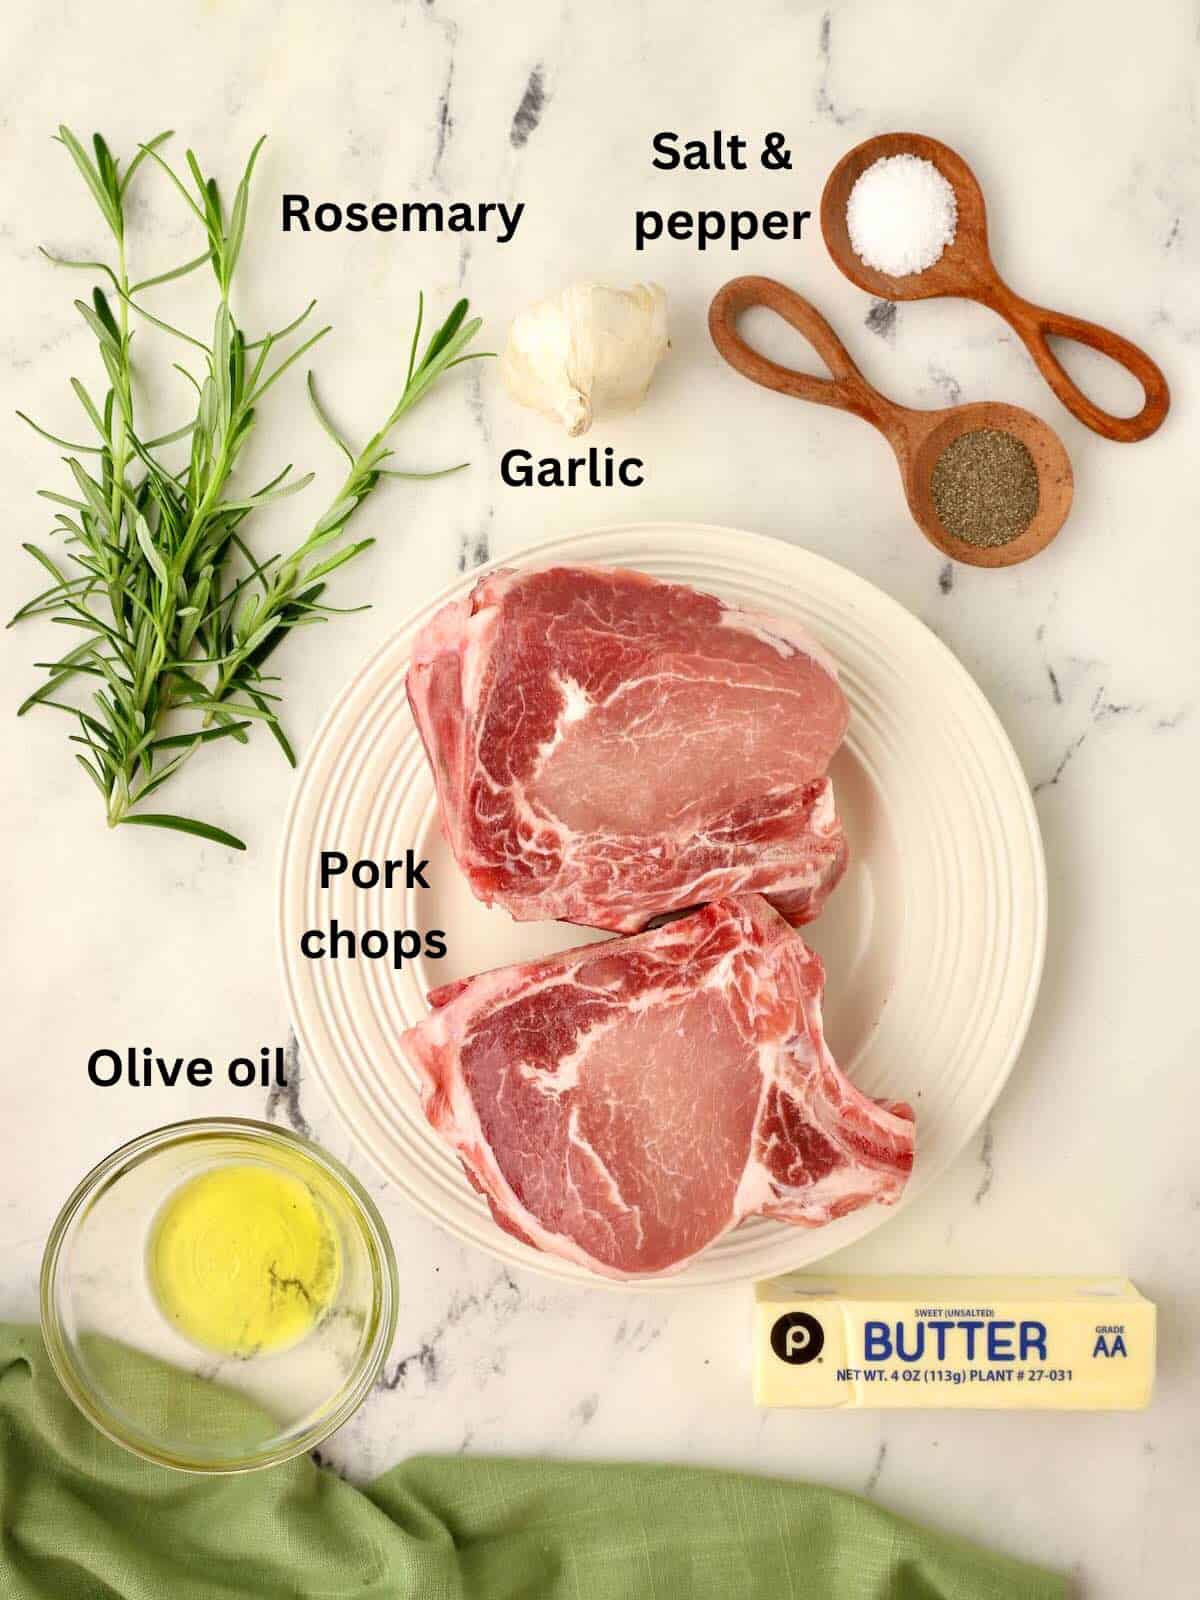 Pork chops, rosemary, a garlic bulb, and salt and pepper on a cutting board to make Rosemary Pork Chops. 